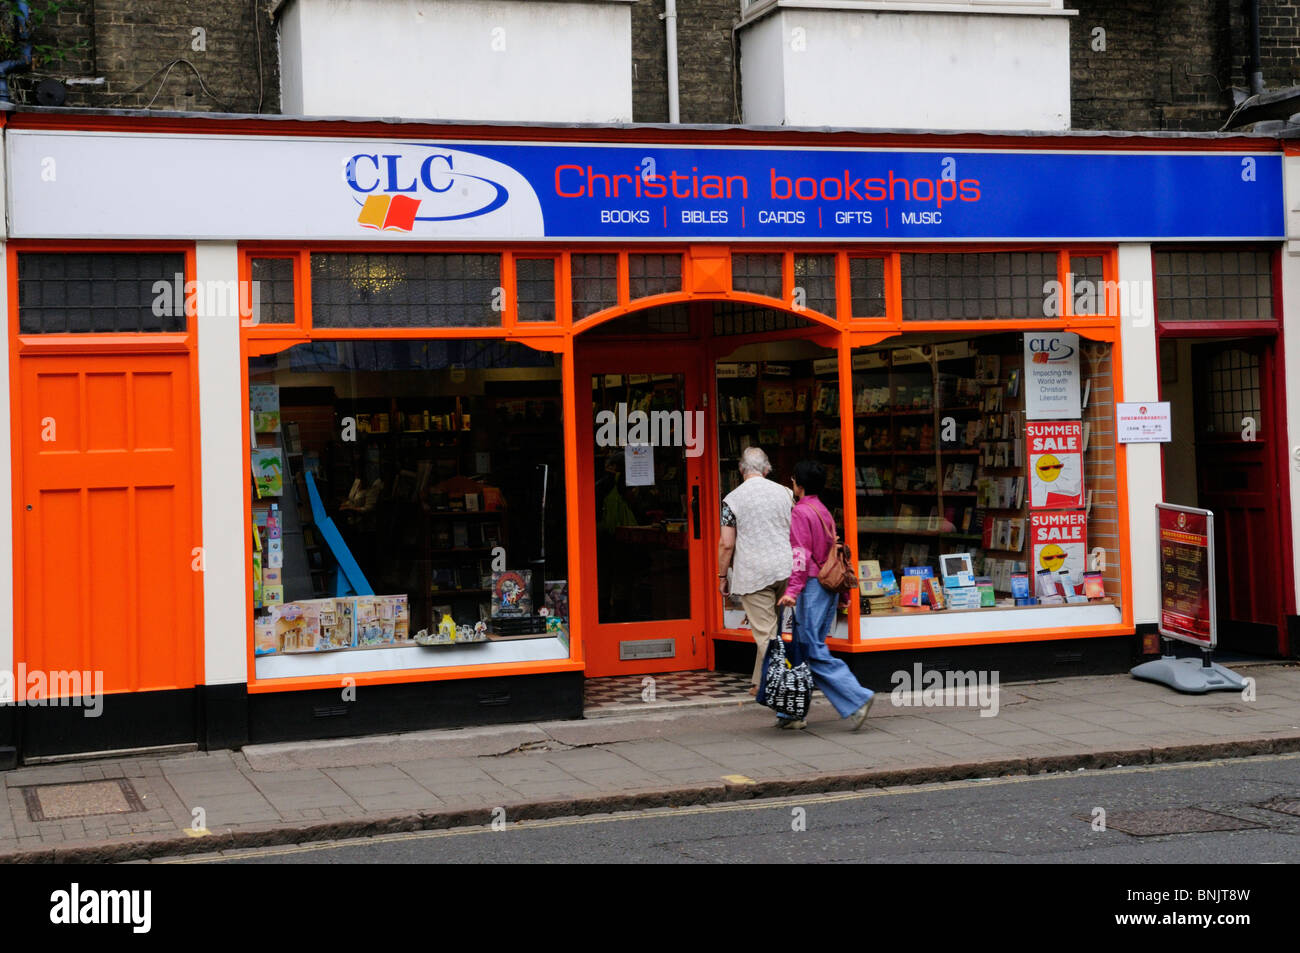 CLC Christian bookshops, Regent Street, Cambridge, England, UK Stock Photo